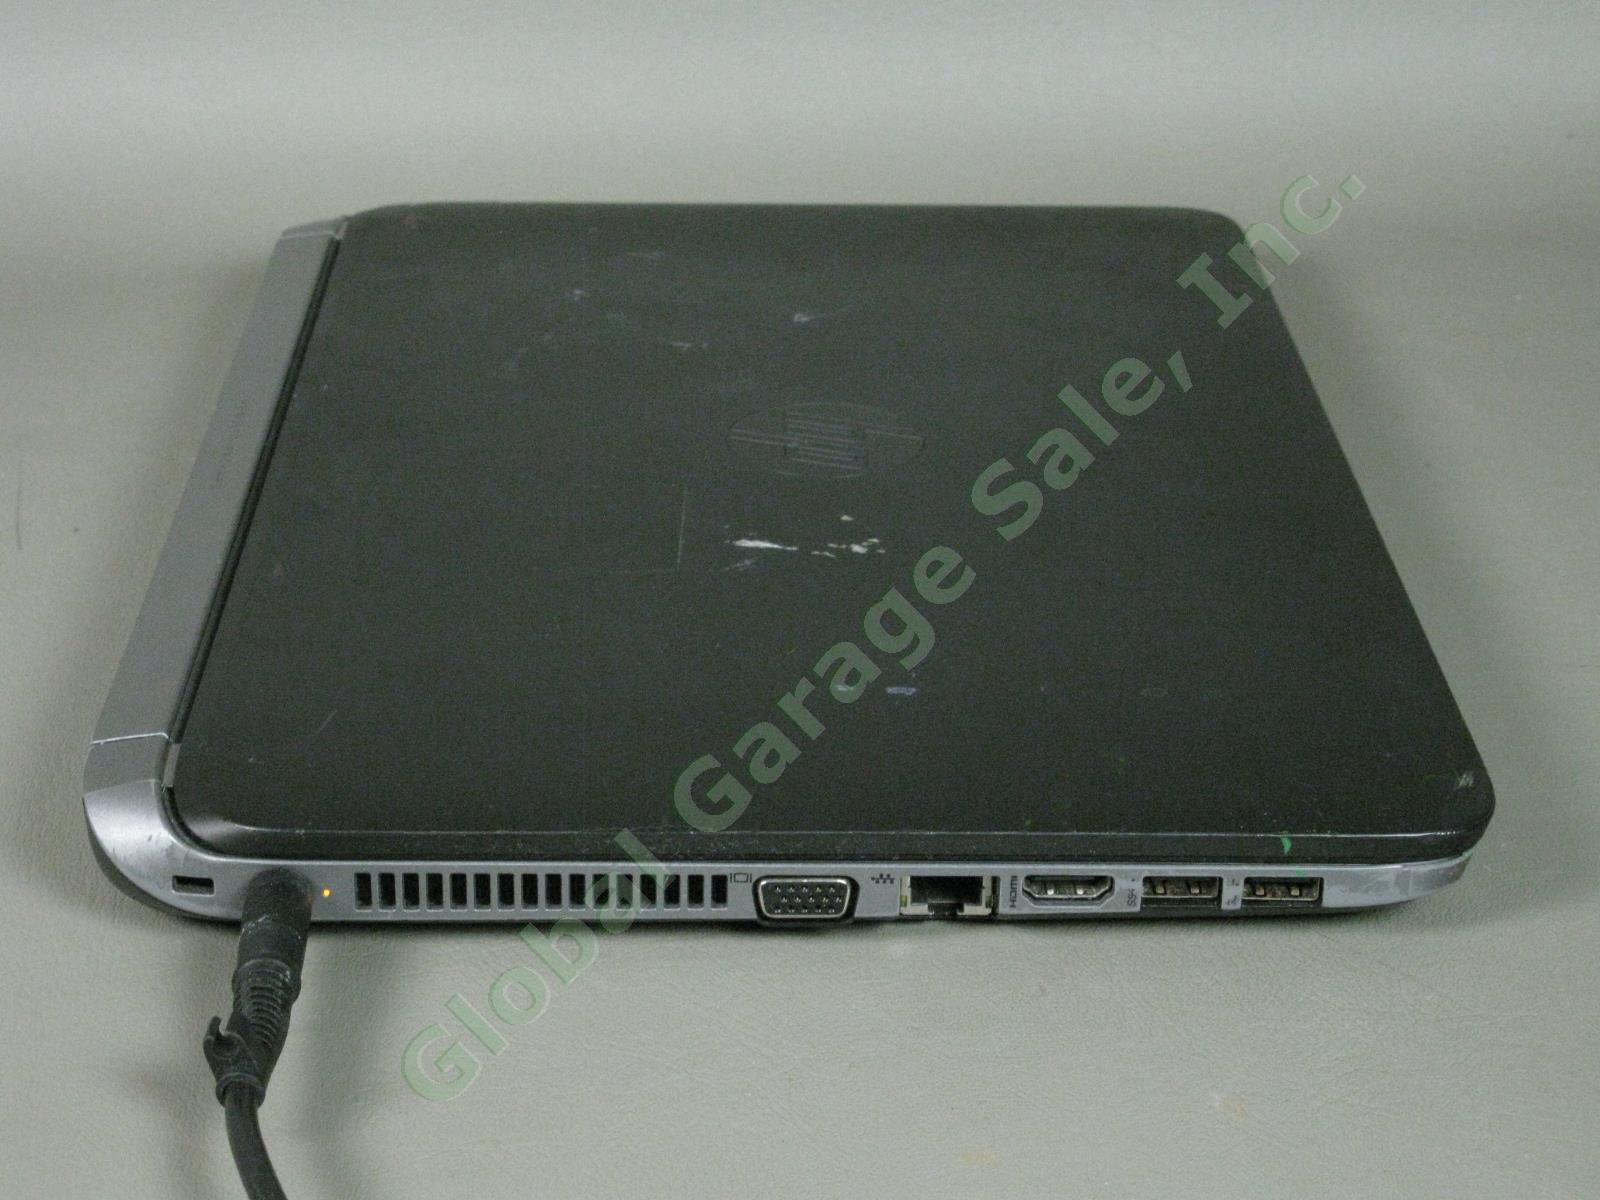 HP ProBook Laptop 440 G2 i5-5200U 2.20GHz 4GB RAM 460GB HD Windows 10 Pro Refurb 7